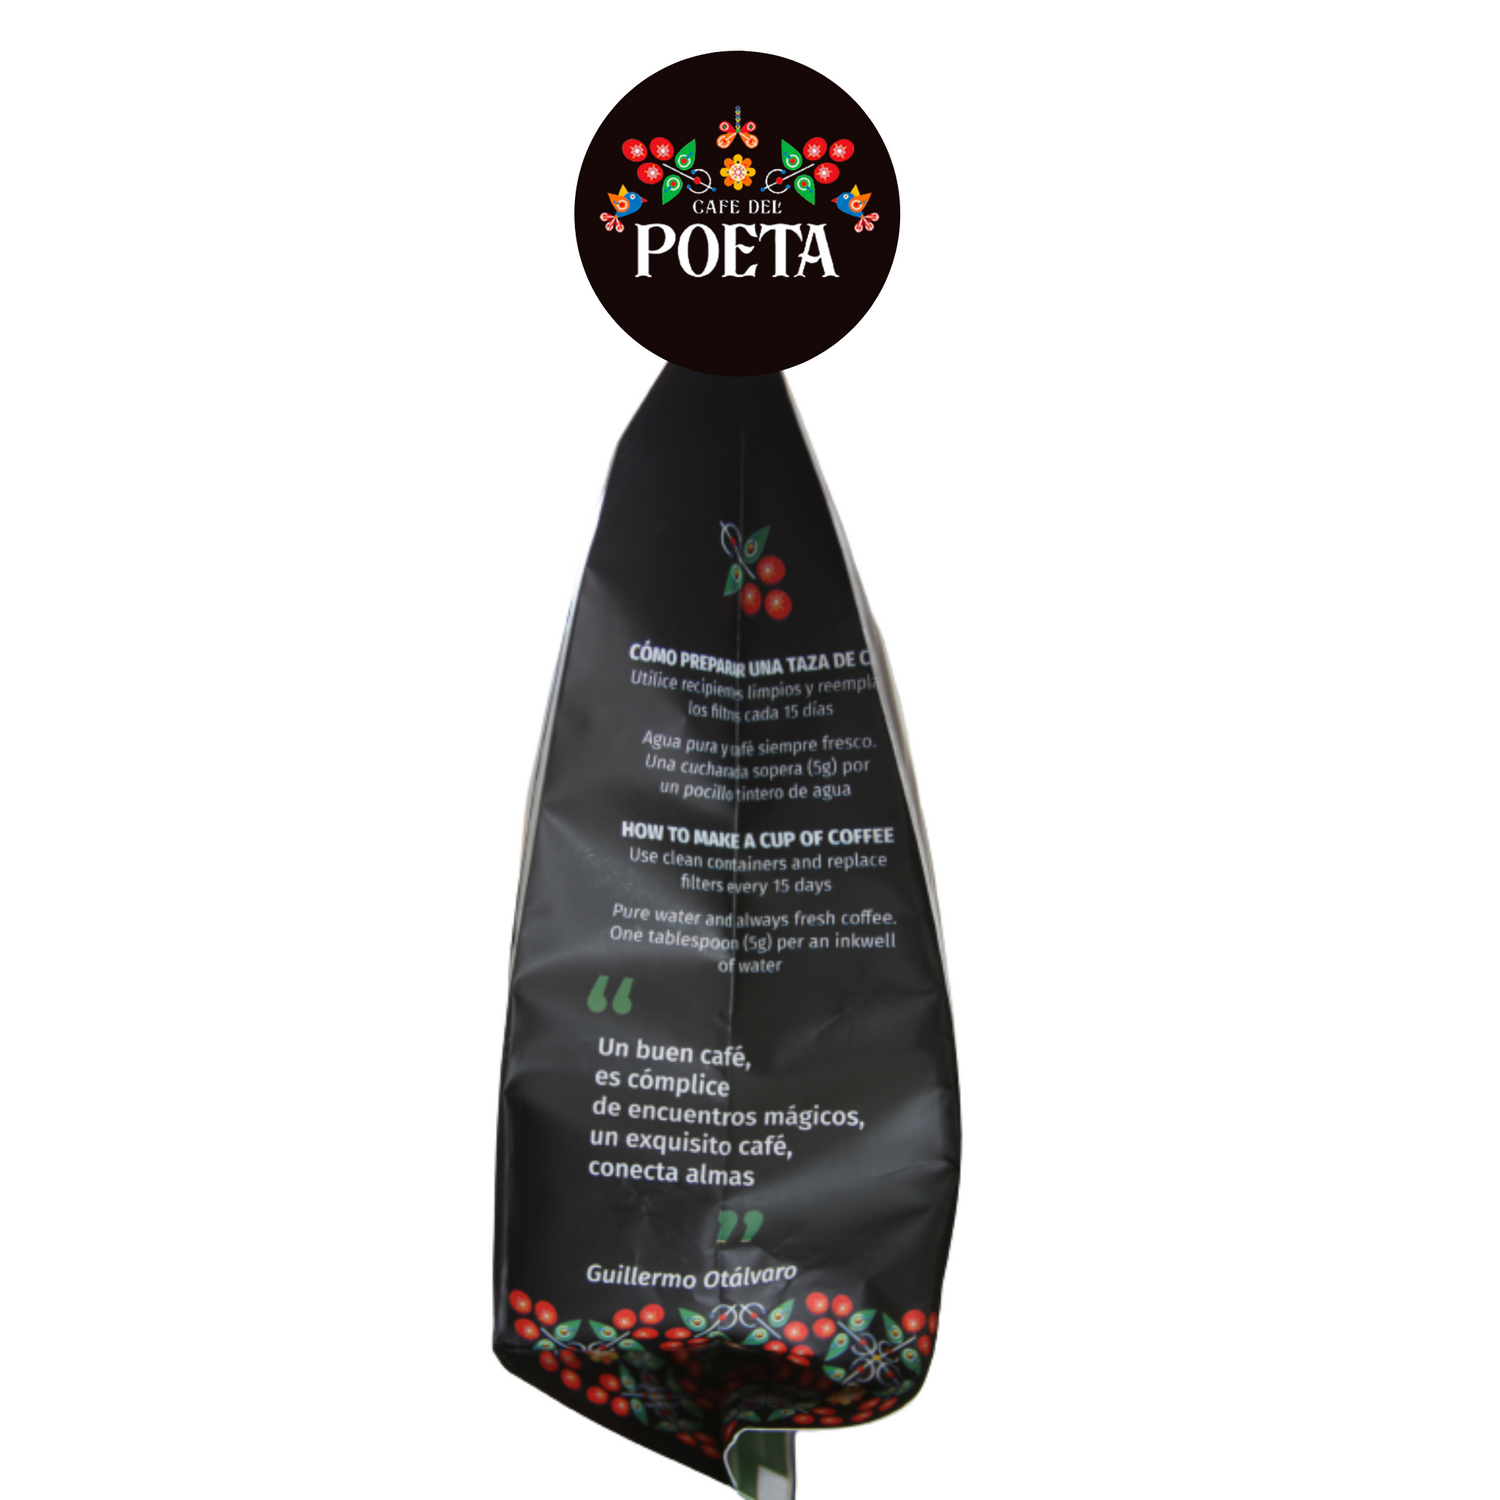 Del Poeta Geisha Certified Single-Origin Colombian Coffee. Instructions